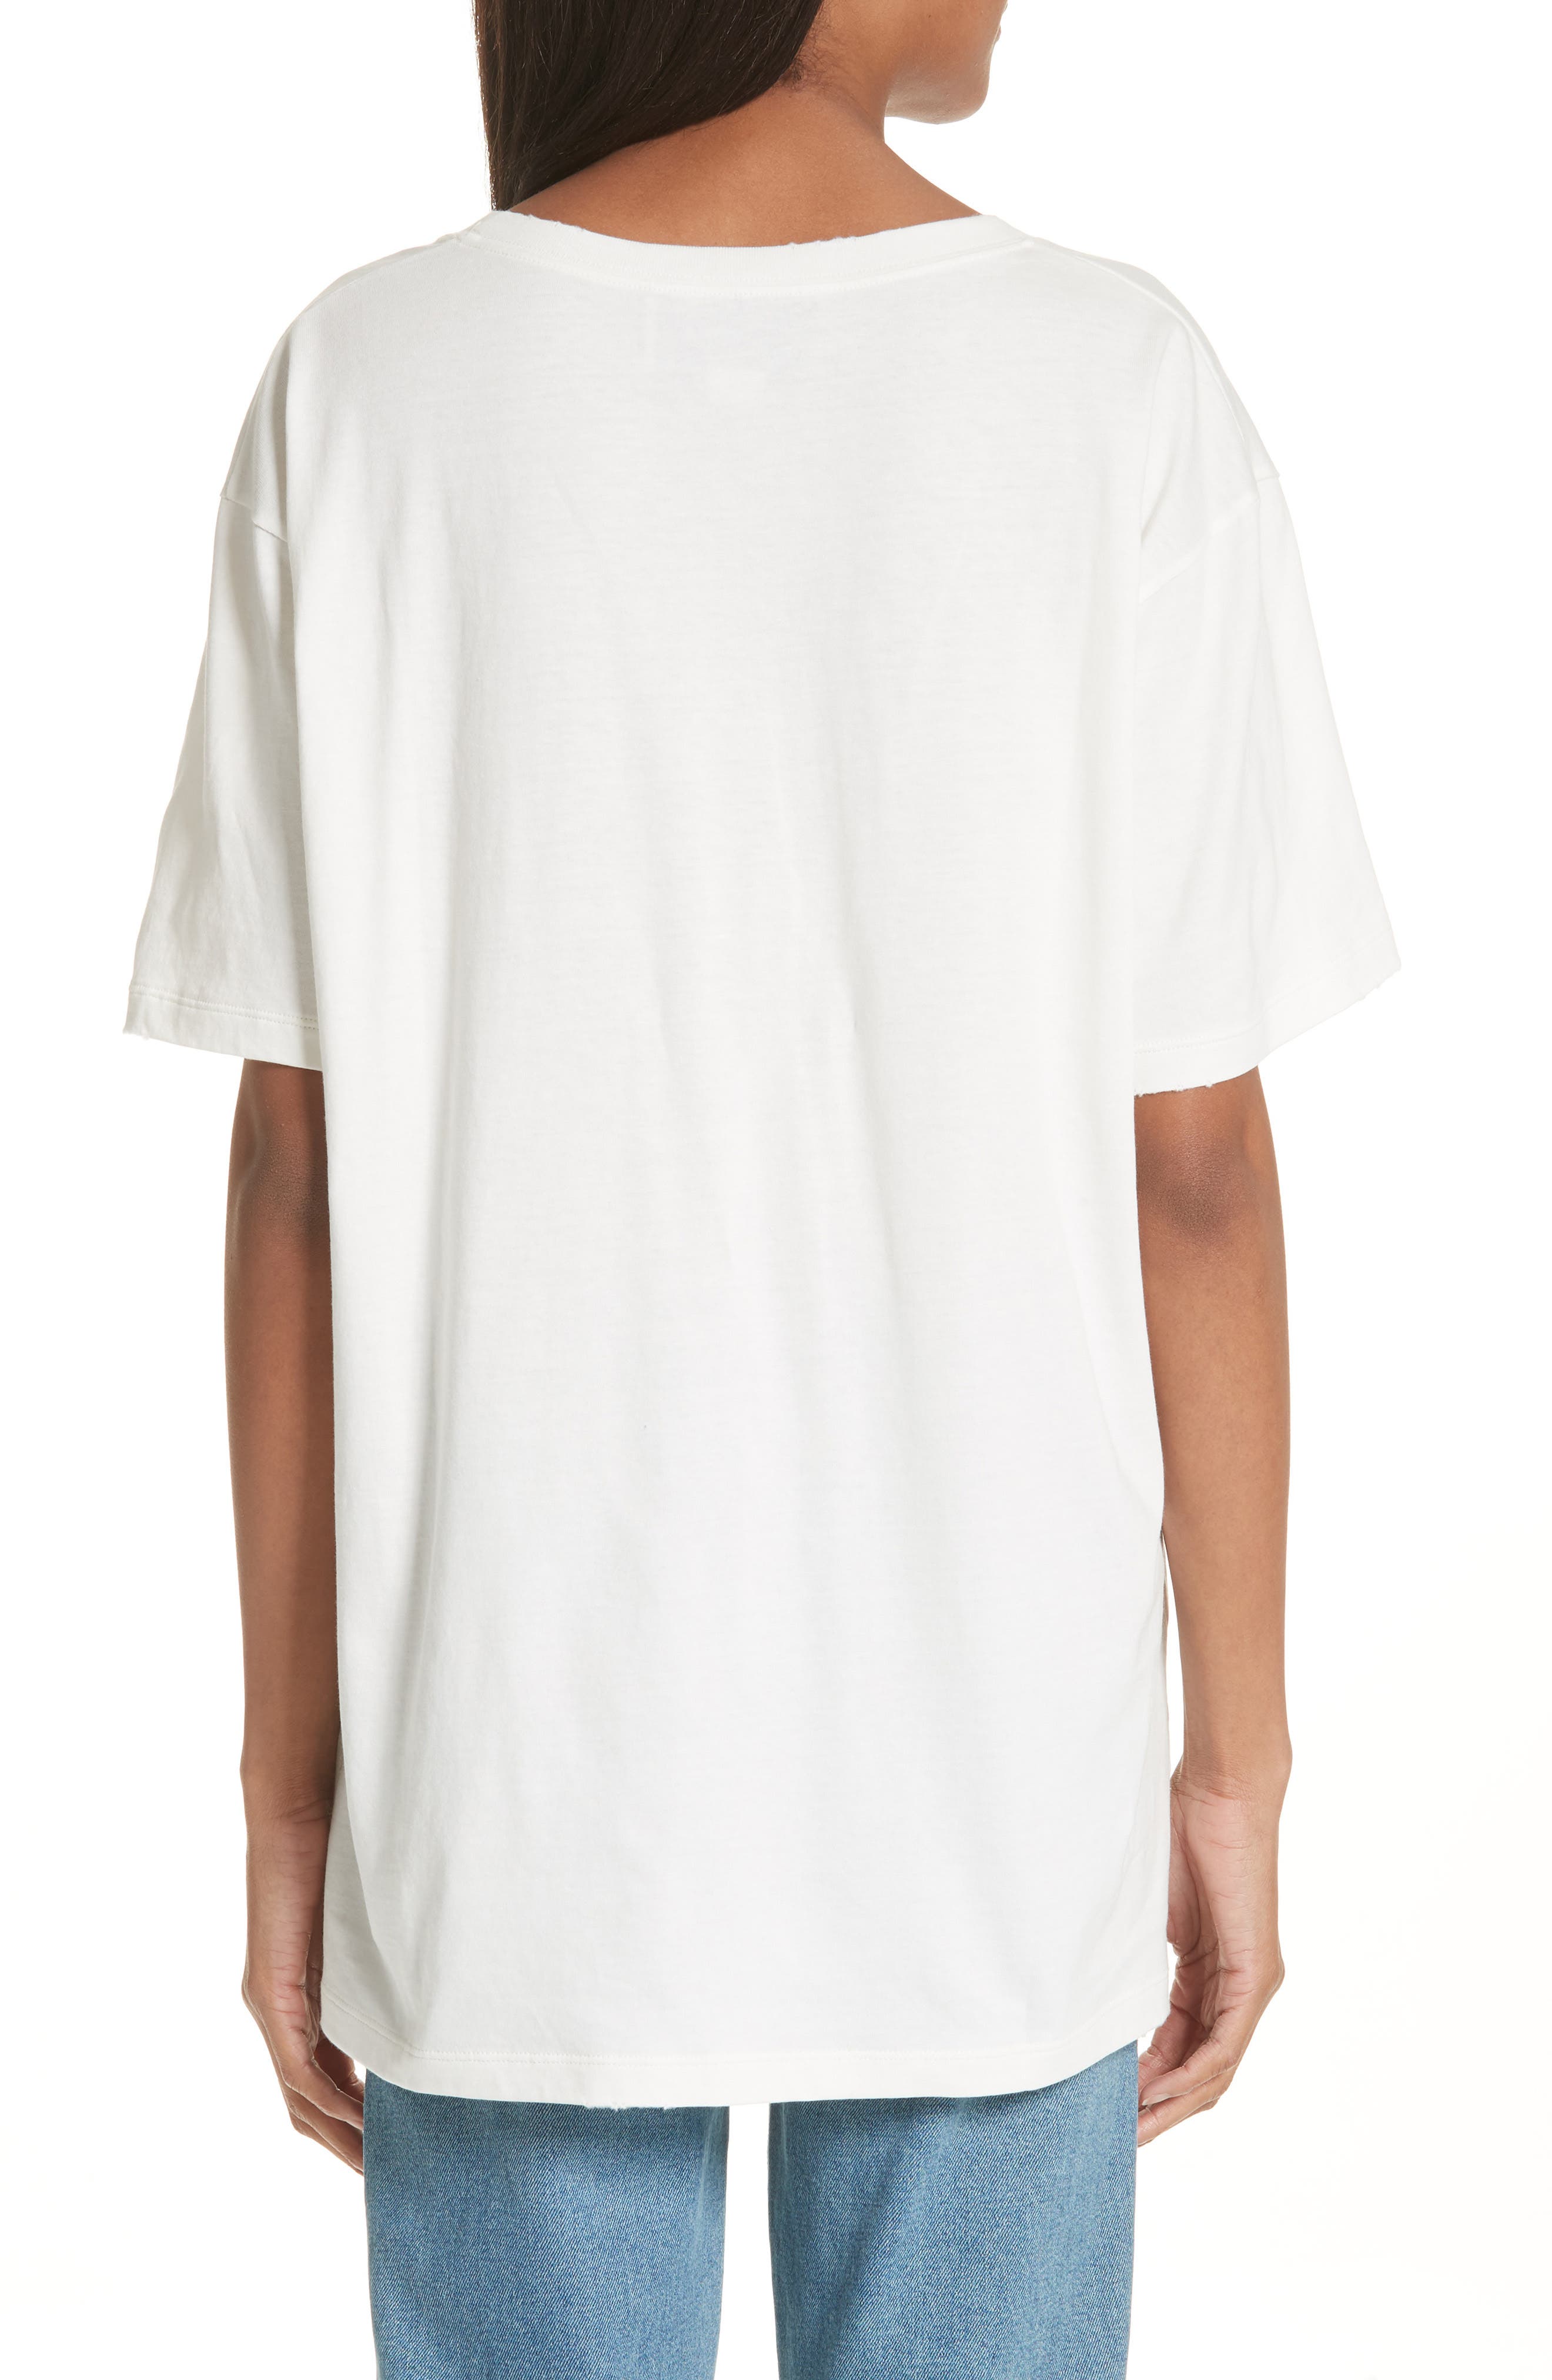 Roblox T Shirt Cannon Codes Coolmine Community School - 5 robux shirt vs 5000 robux shirt